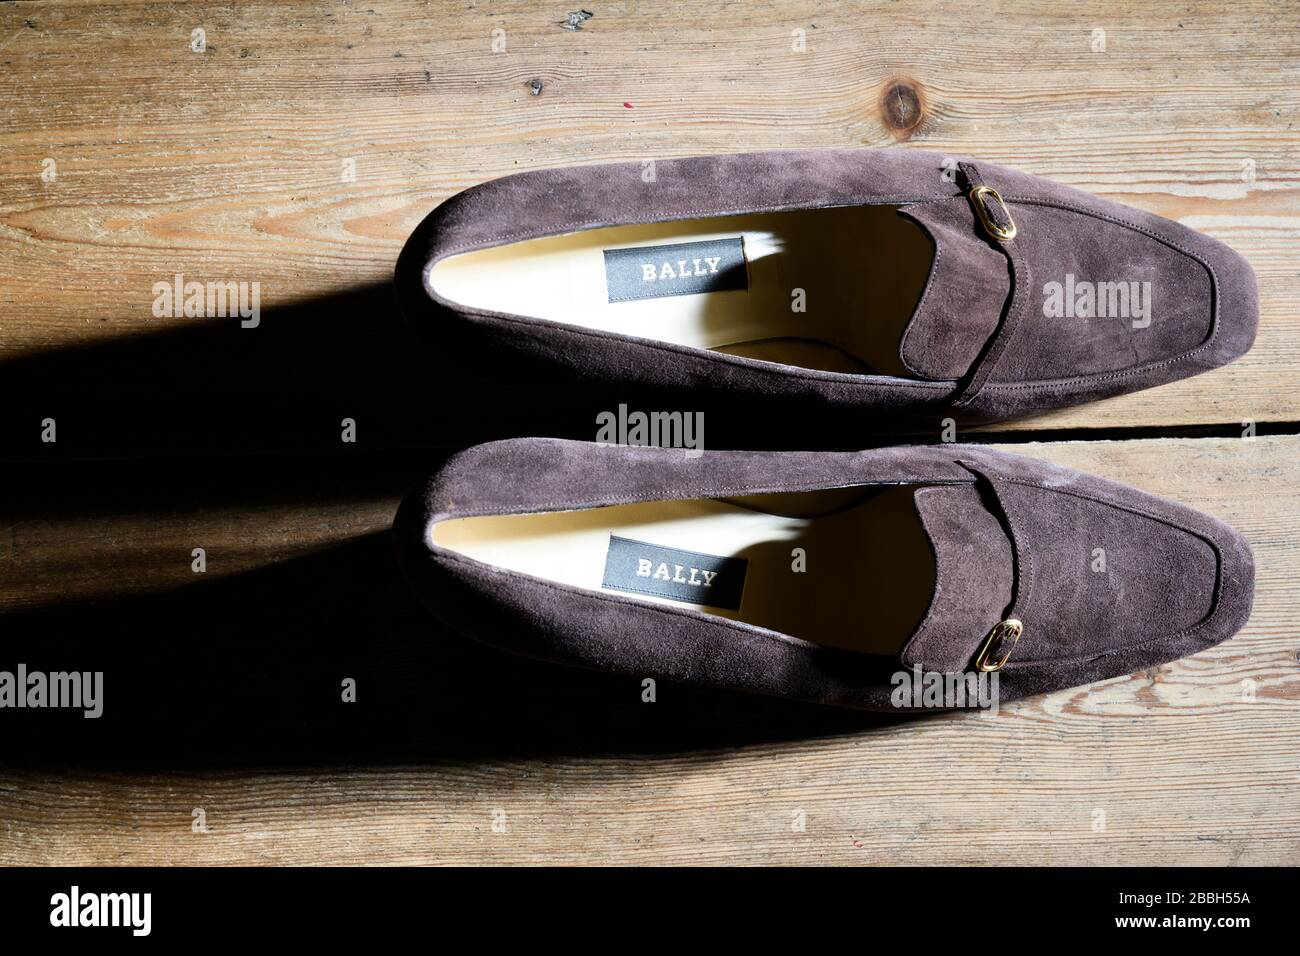 Ladies Bally shoes Stock Photo - Alamy